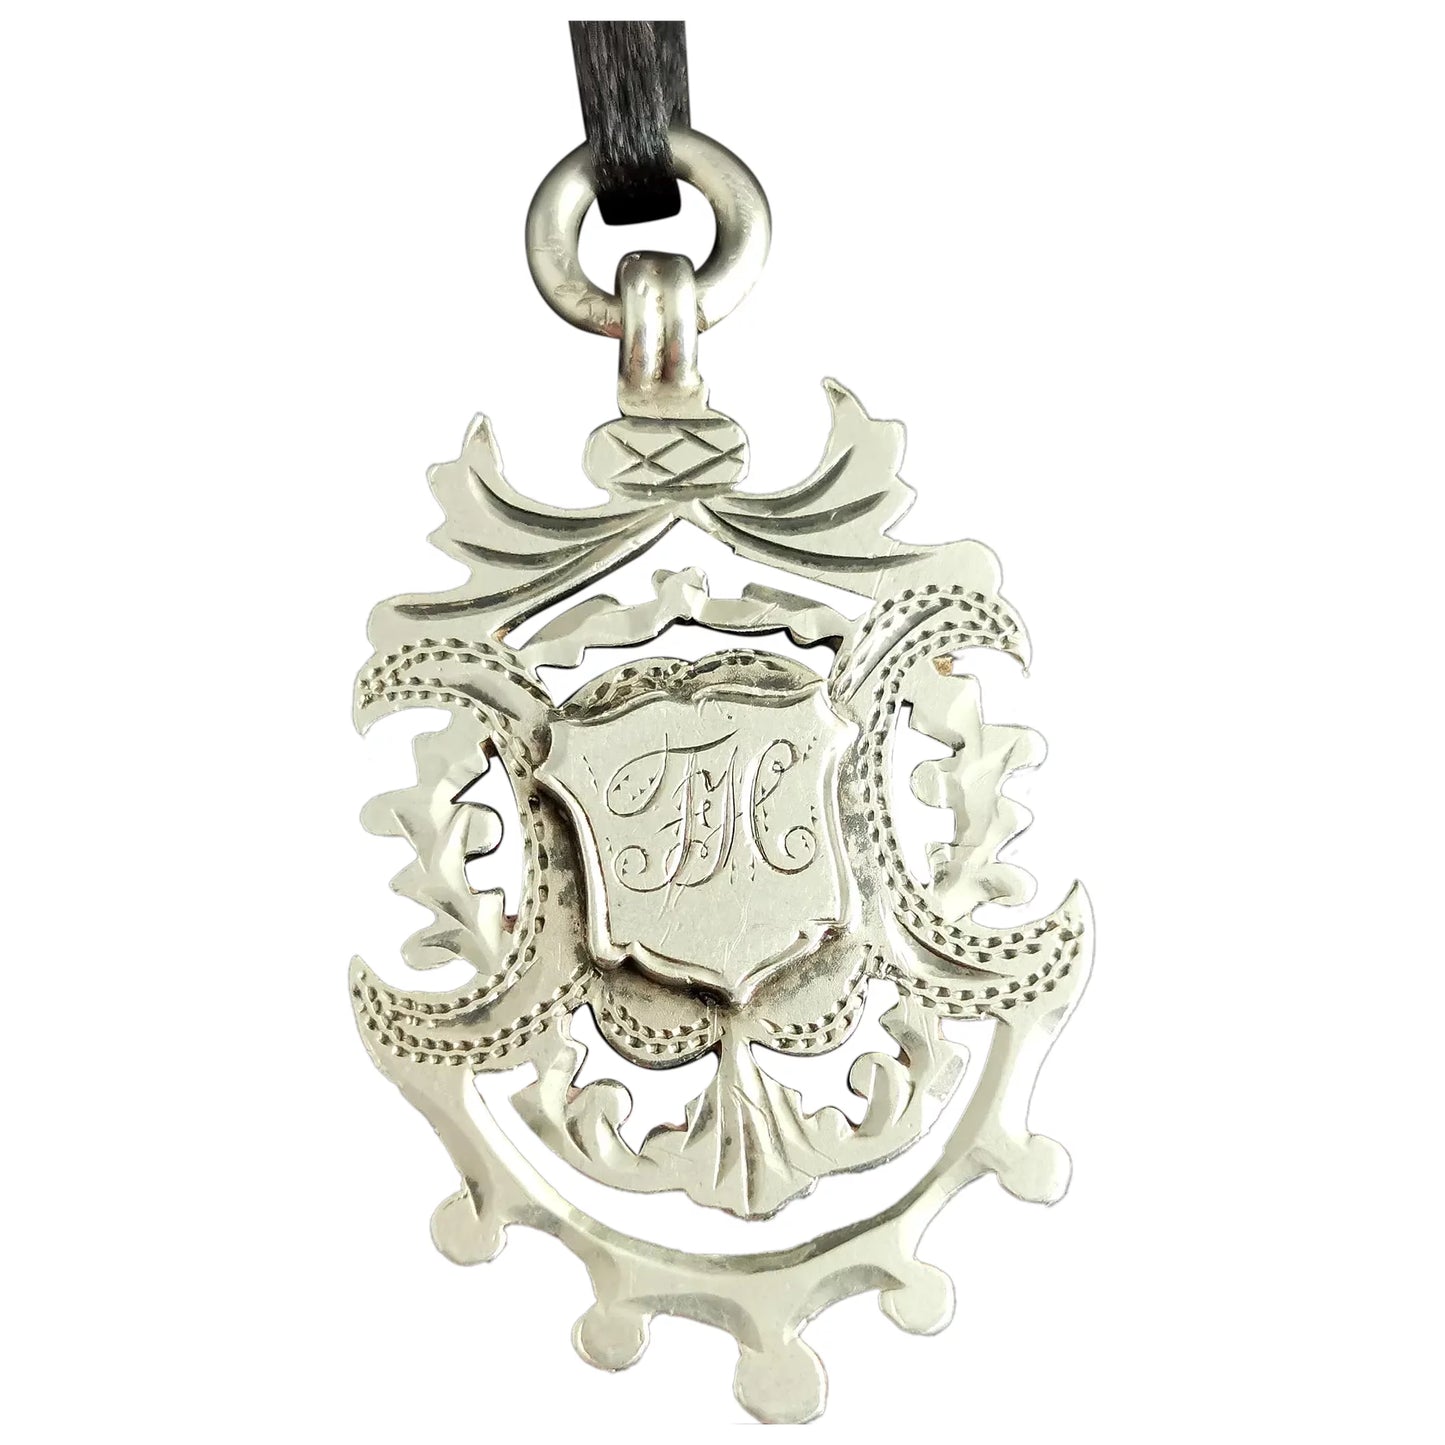 Antique Victorian silver Watch fob pendant, Gymnastics